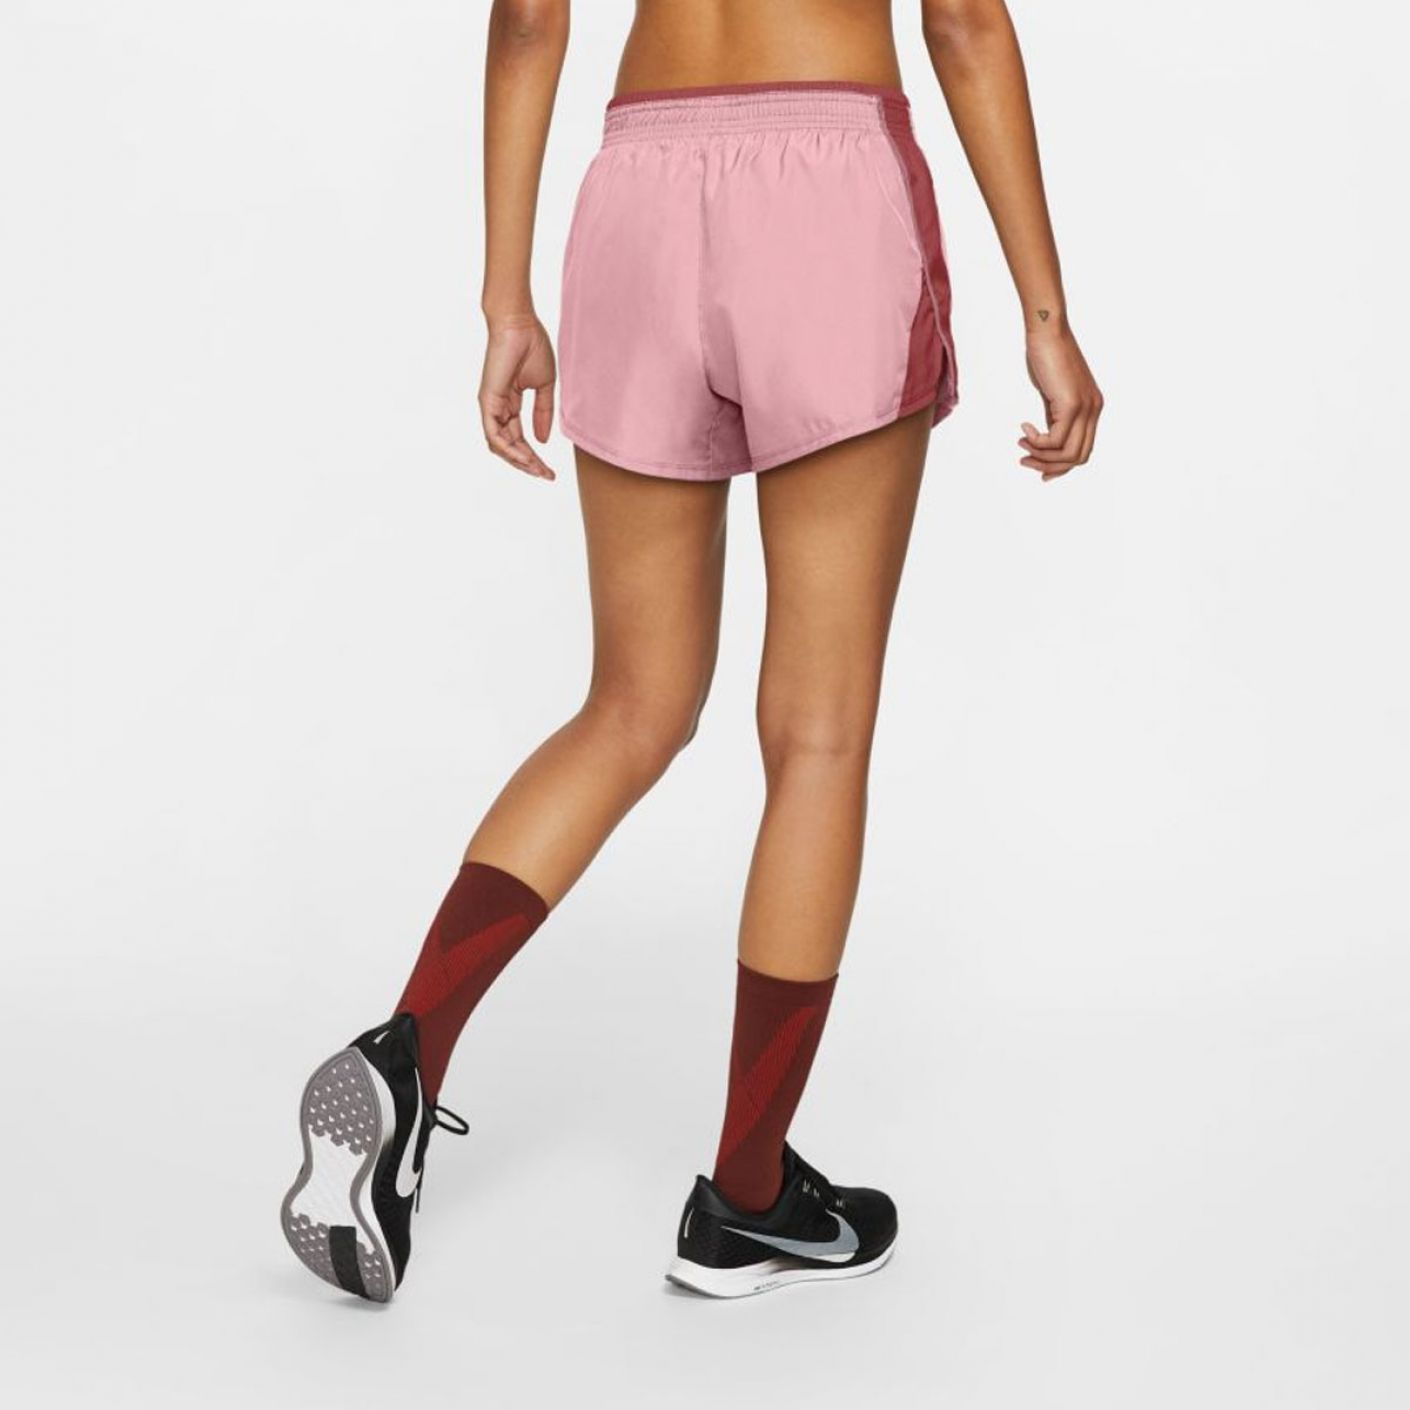 Nike Women's Pink Running Shorts